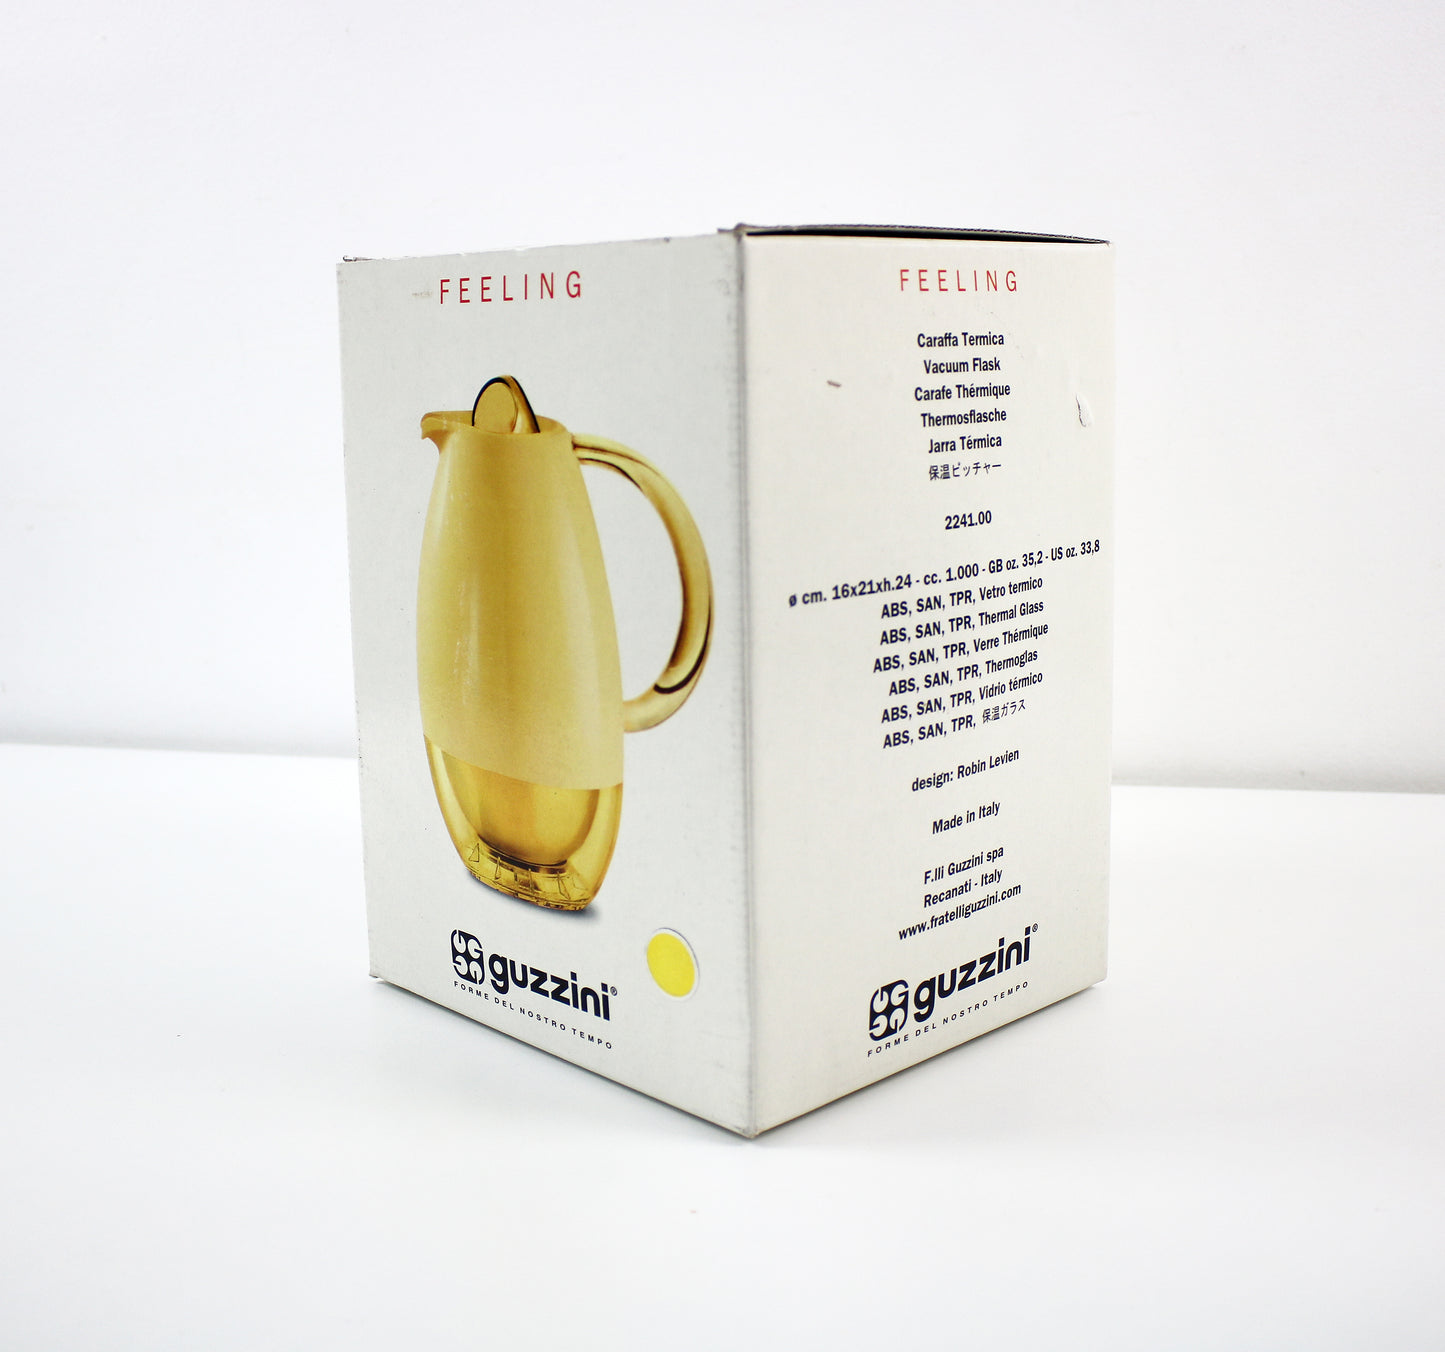 Robin Levien 'Feeling' vacuum flask for Fratelli Guzzini 2003